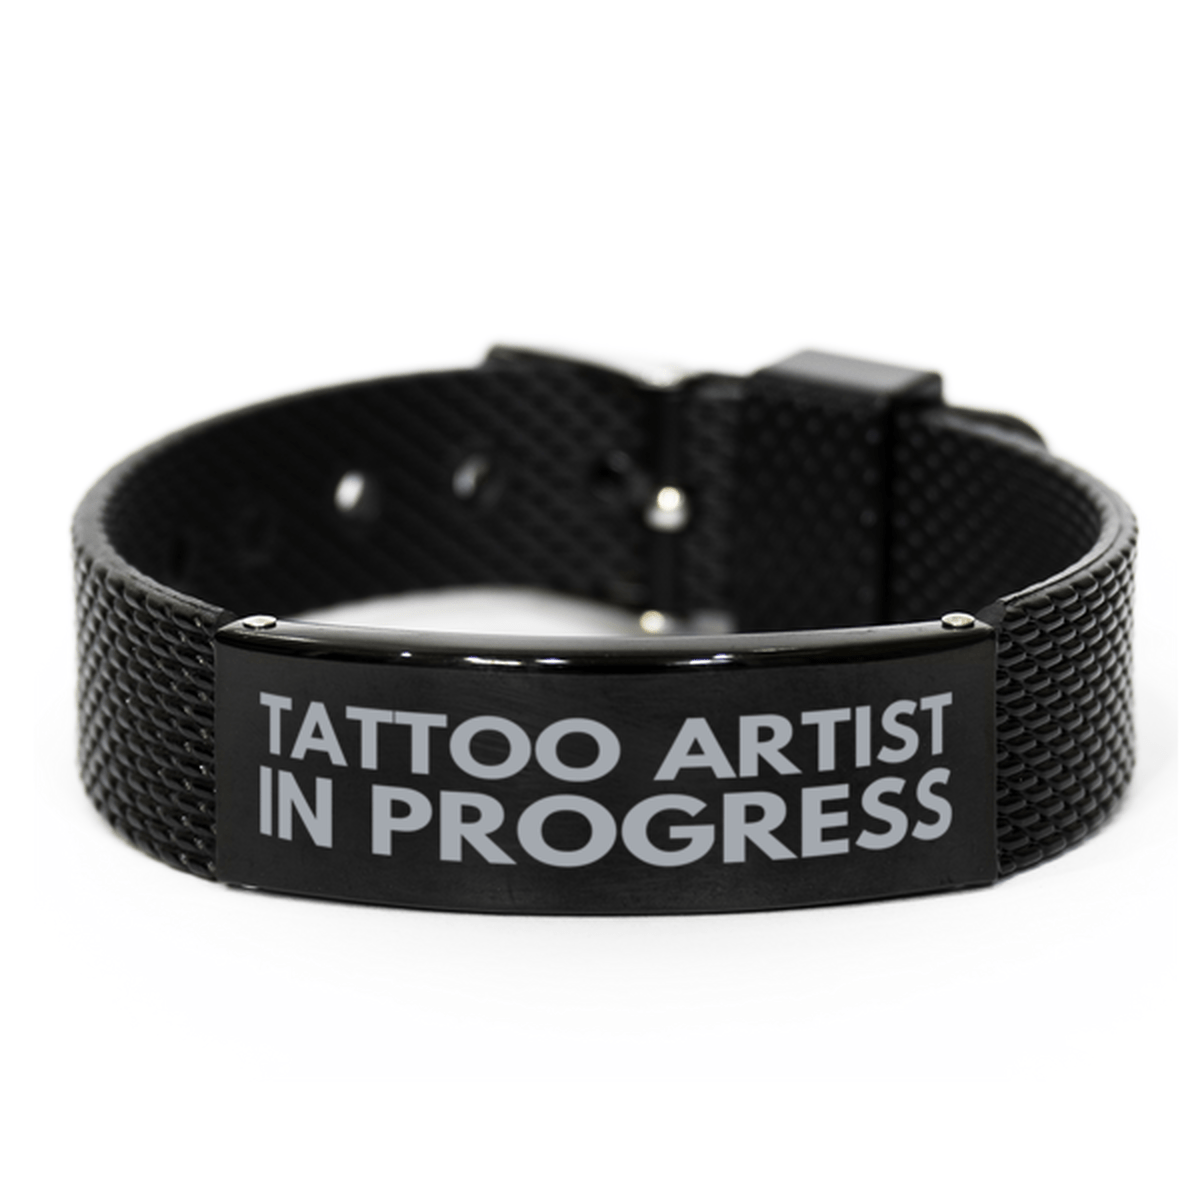 Inspirational Tattoo Artist Black Shark Mesh Bracelet, Tattoo Artist In Progress, Best Graduation Gifts for Students